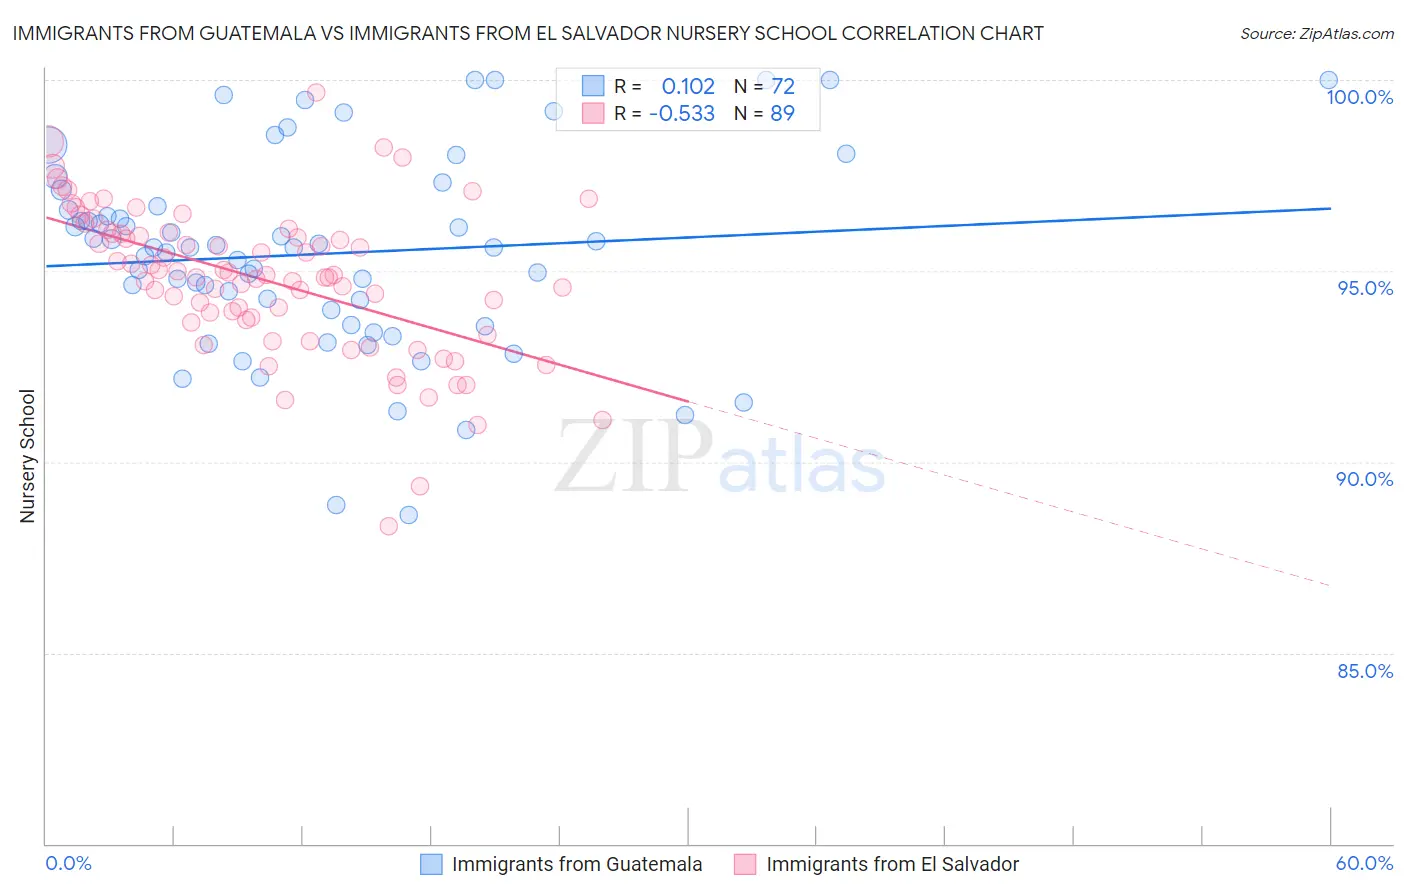 Immigrants from Guatemala vs Immigrants from El Salvador Nursery School